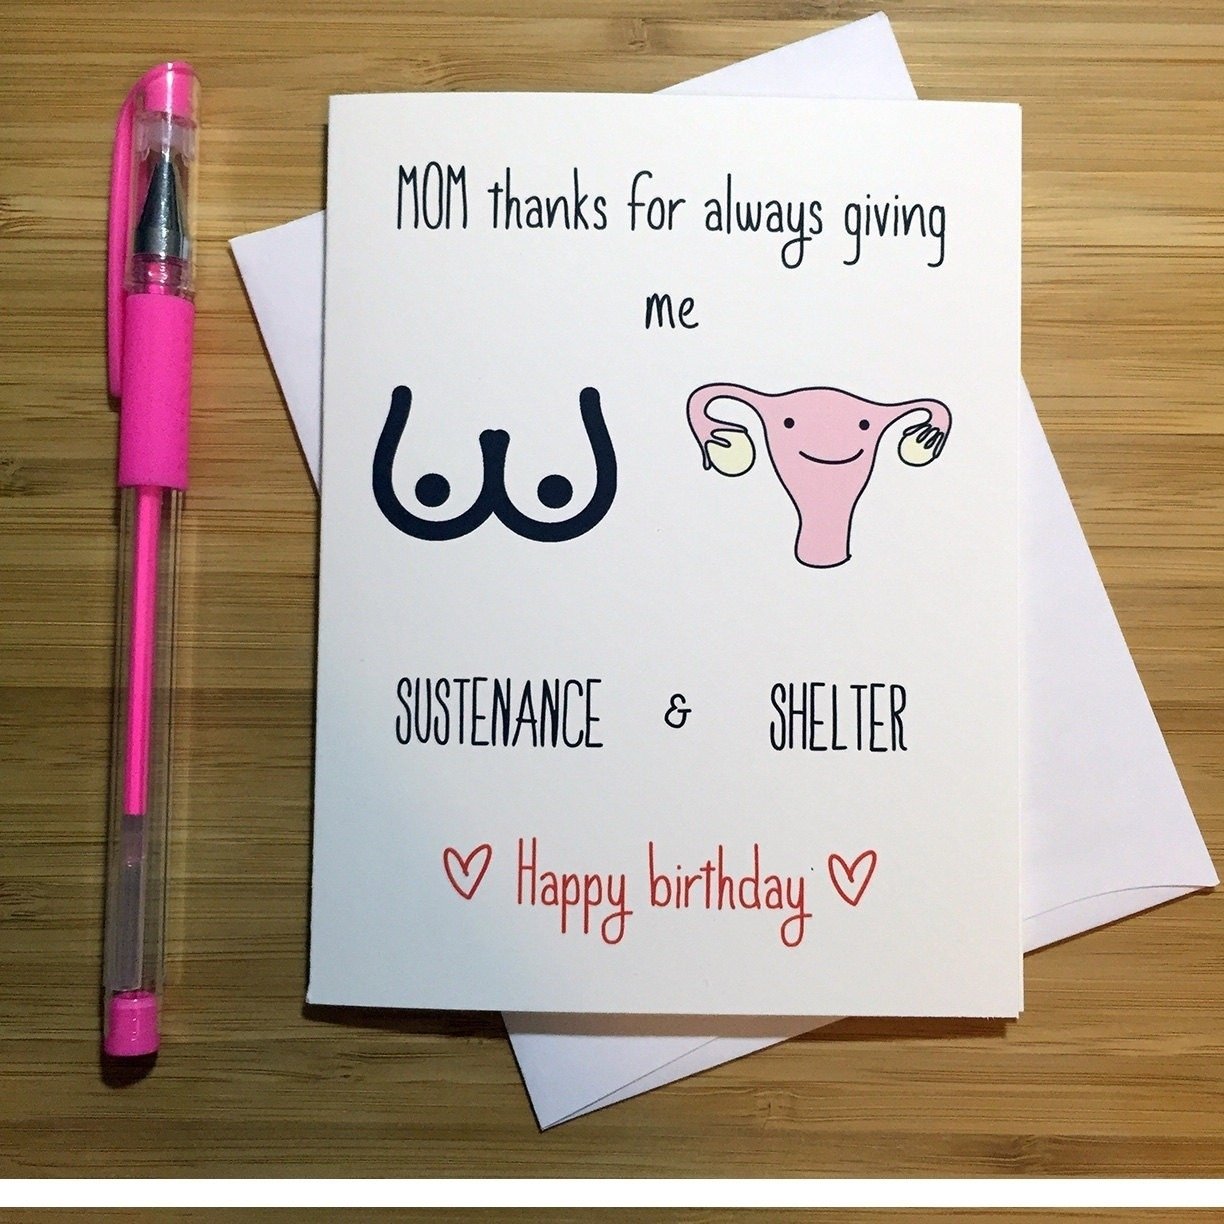 10 Amazing Birthday Card Ideas For Mom birthday card happy birthday card ideas things to say birthday cards 1 2022